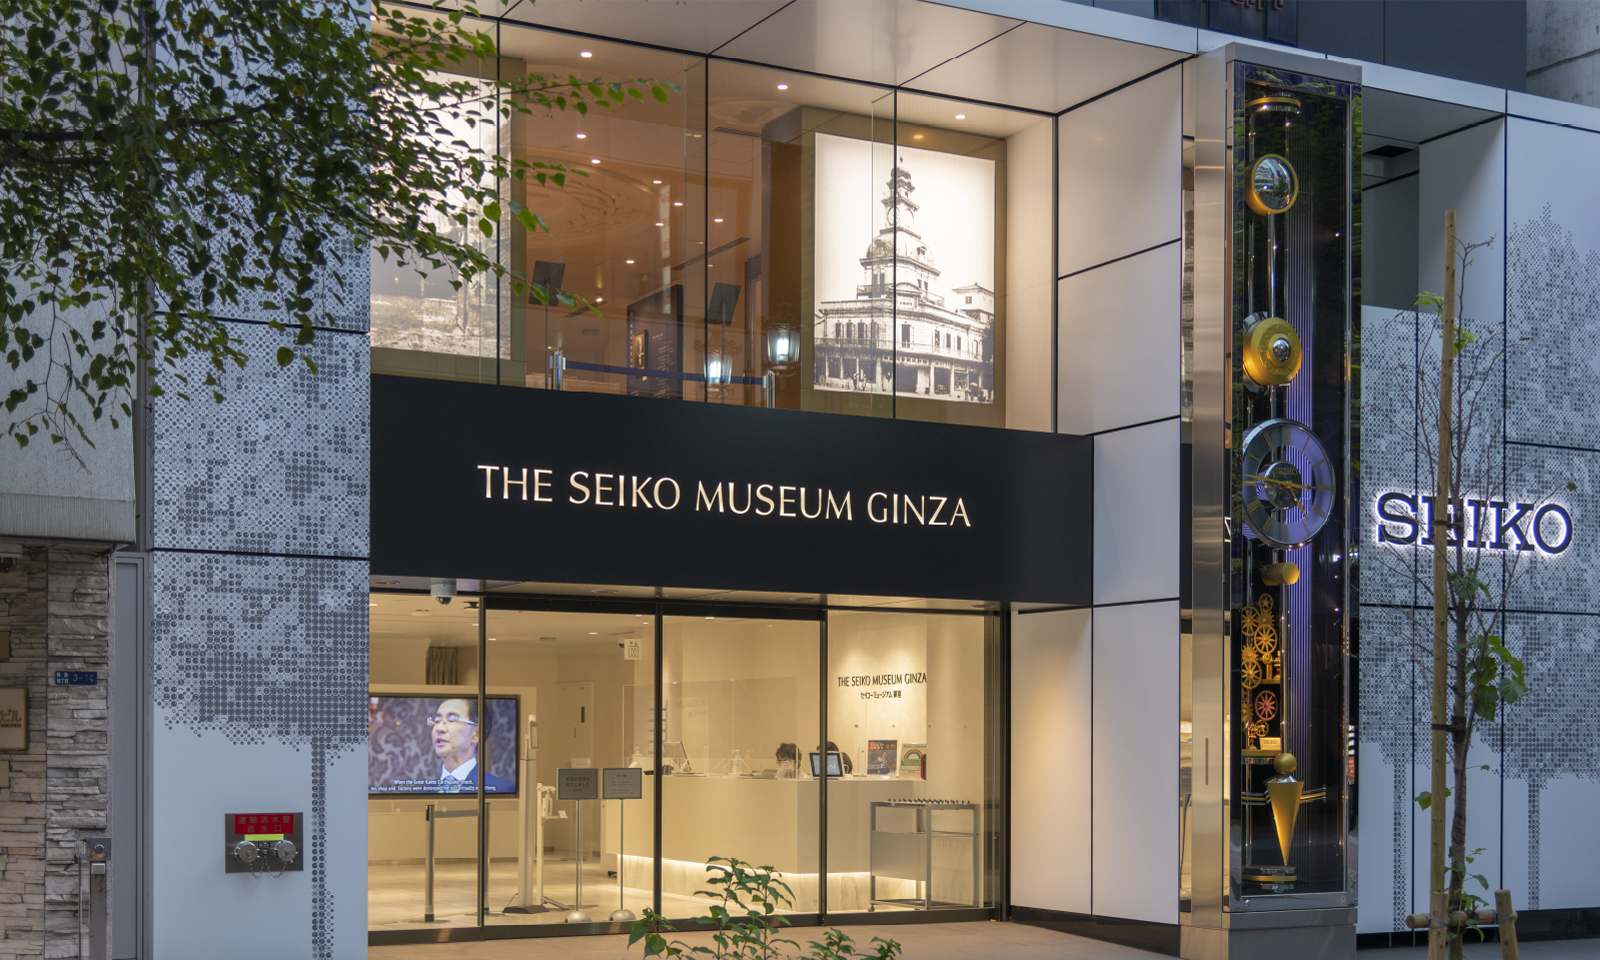 The Seiko Museum